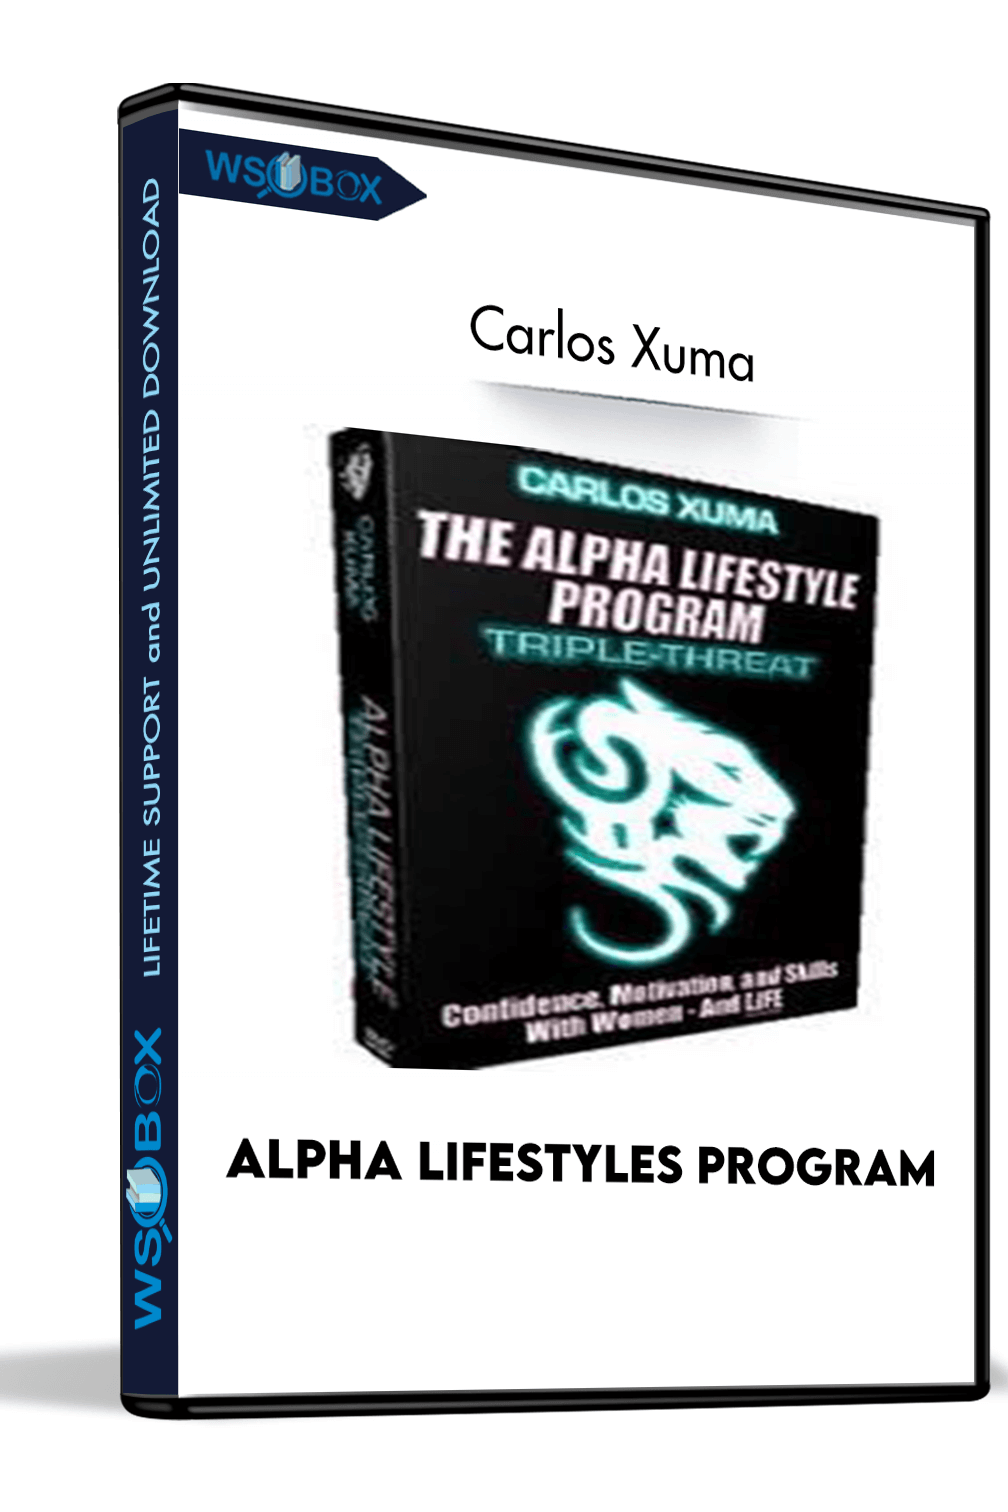 alpha-lifestyles-program-carlos-xuma